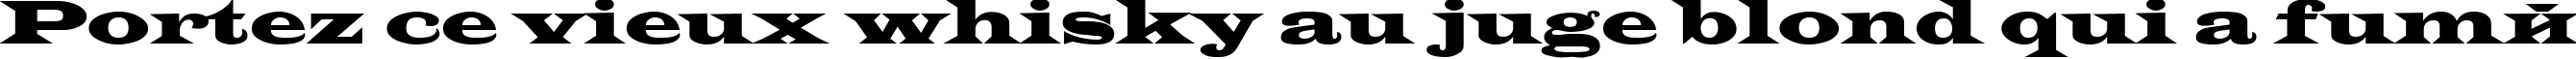 Пример написания шрифтом Latin текста на французском